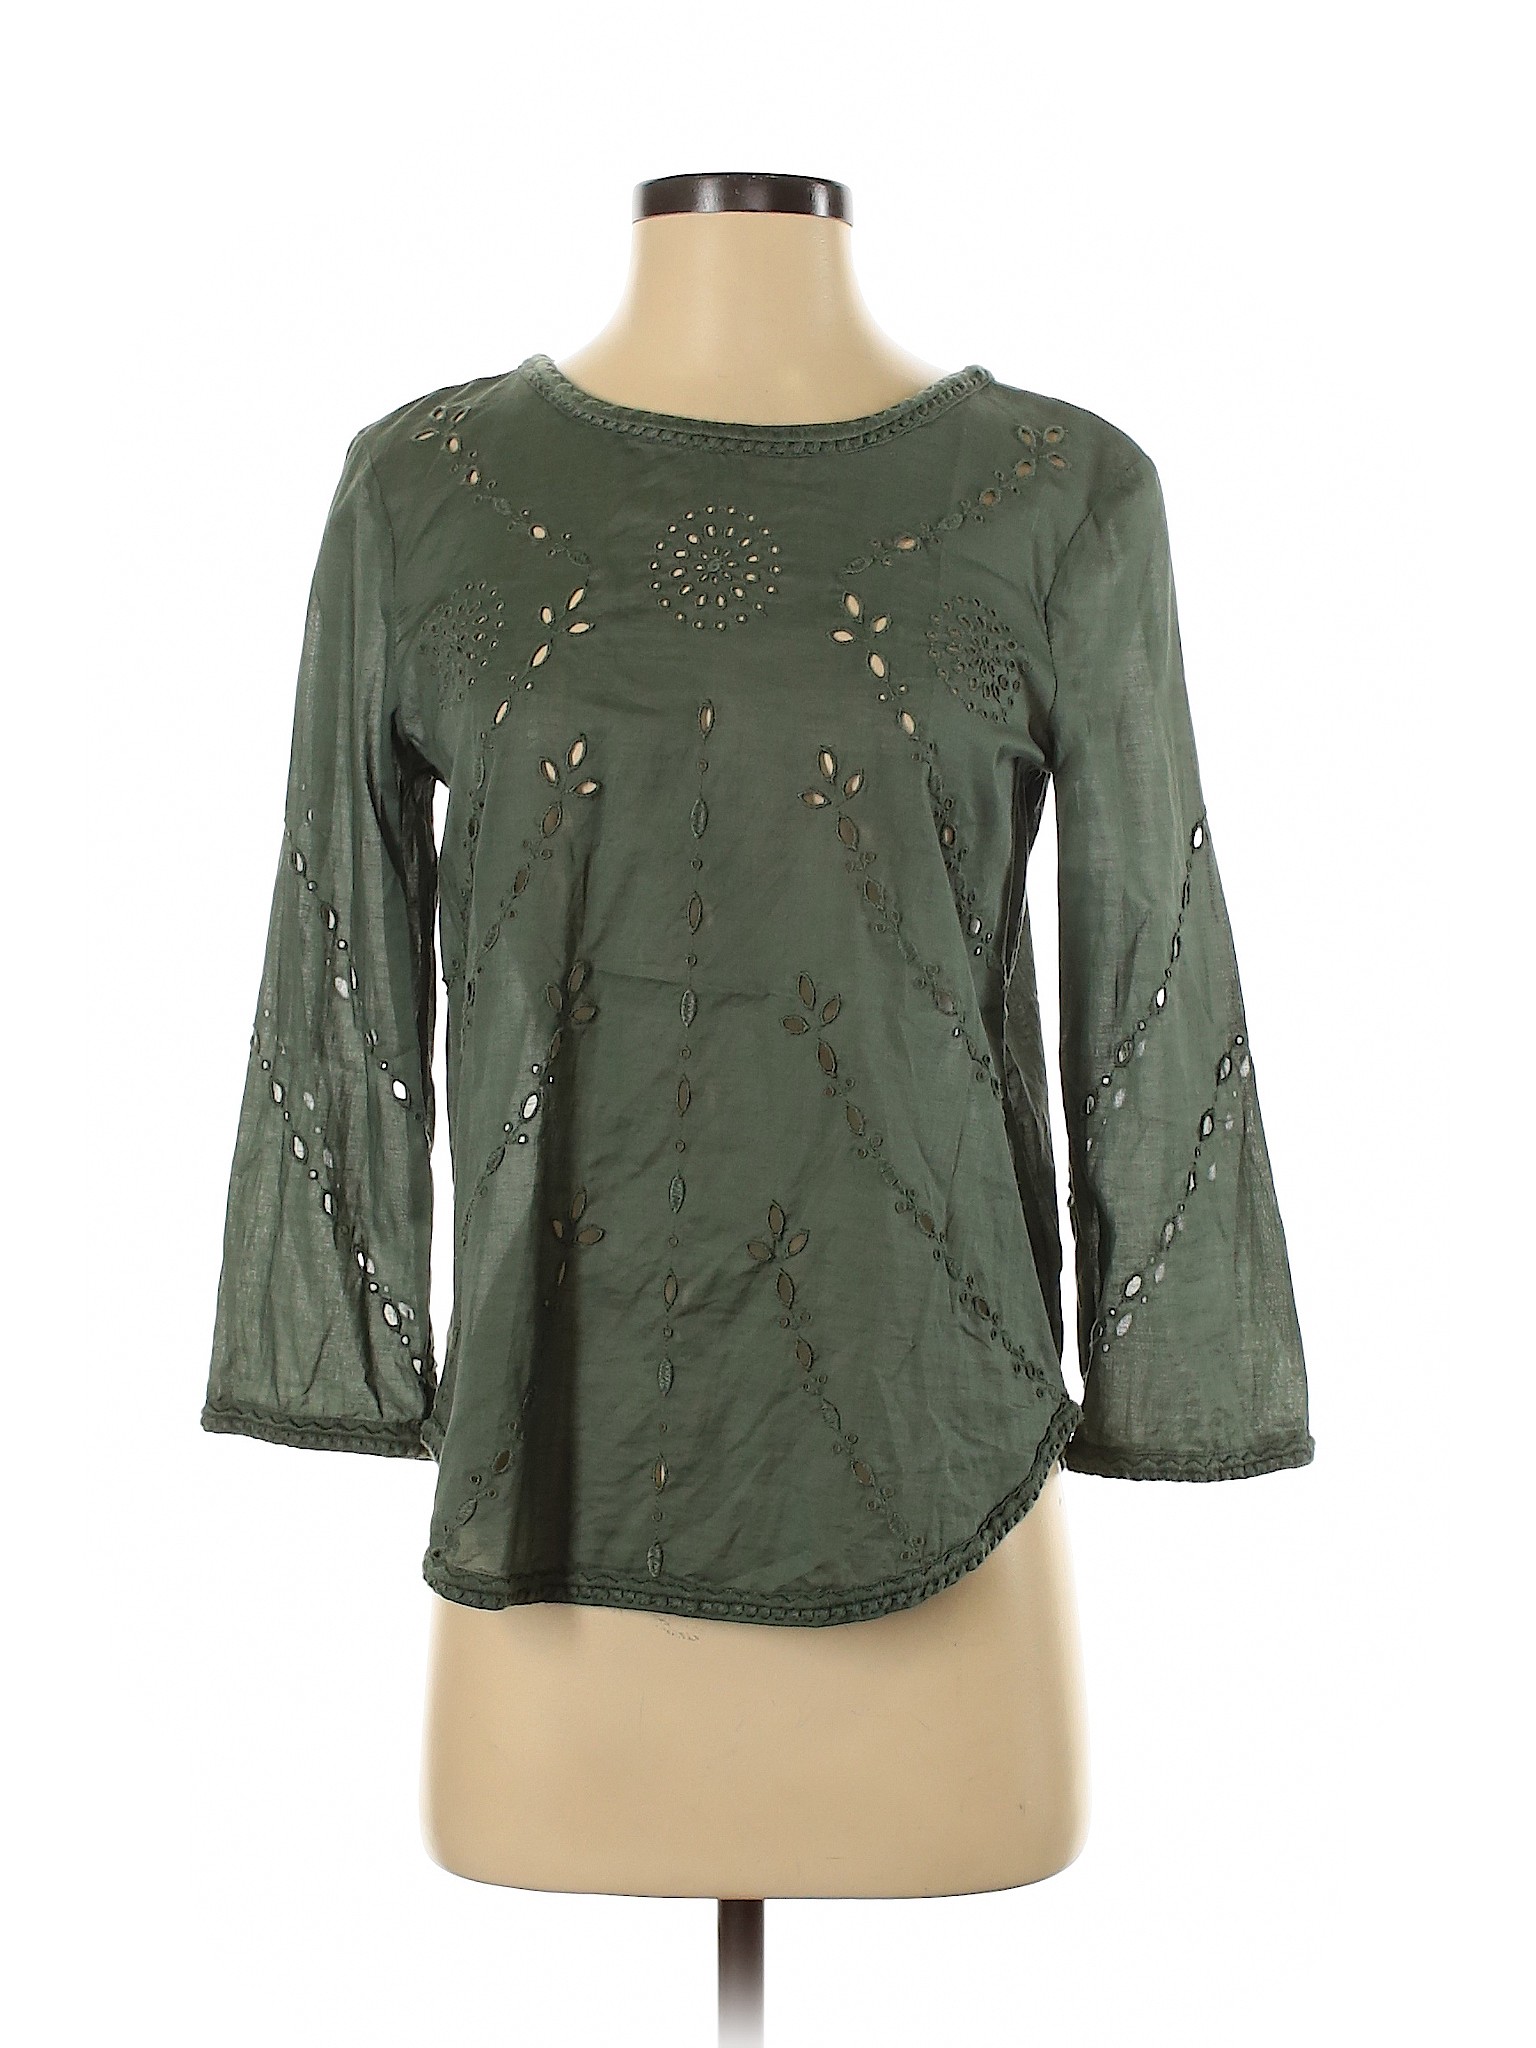 Gap Women Green Long Sleeve Blouse XS | eBay